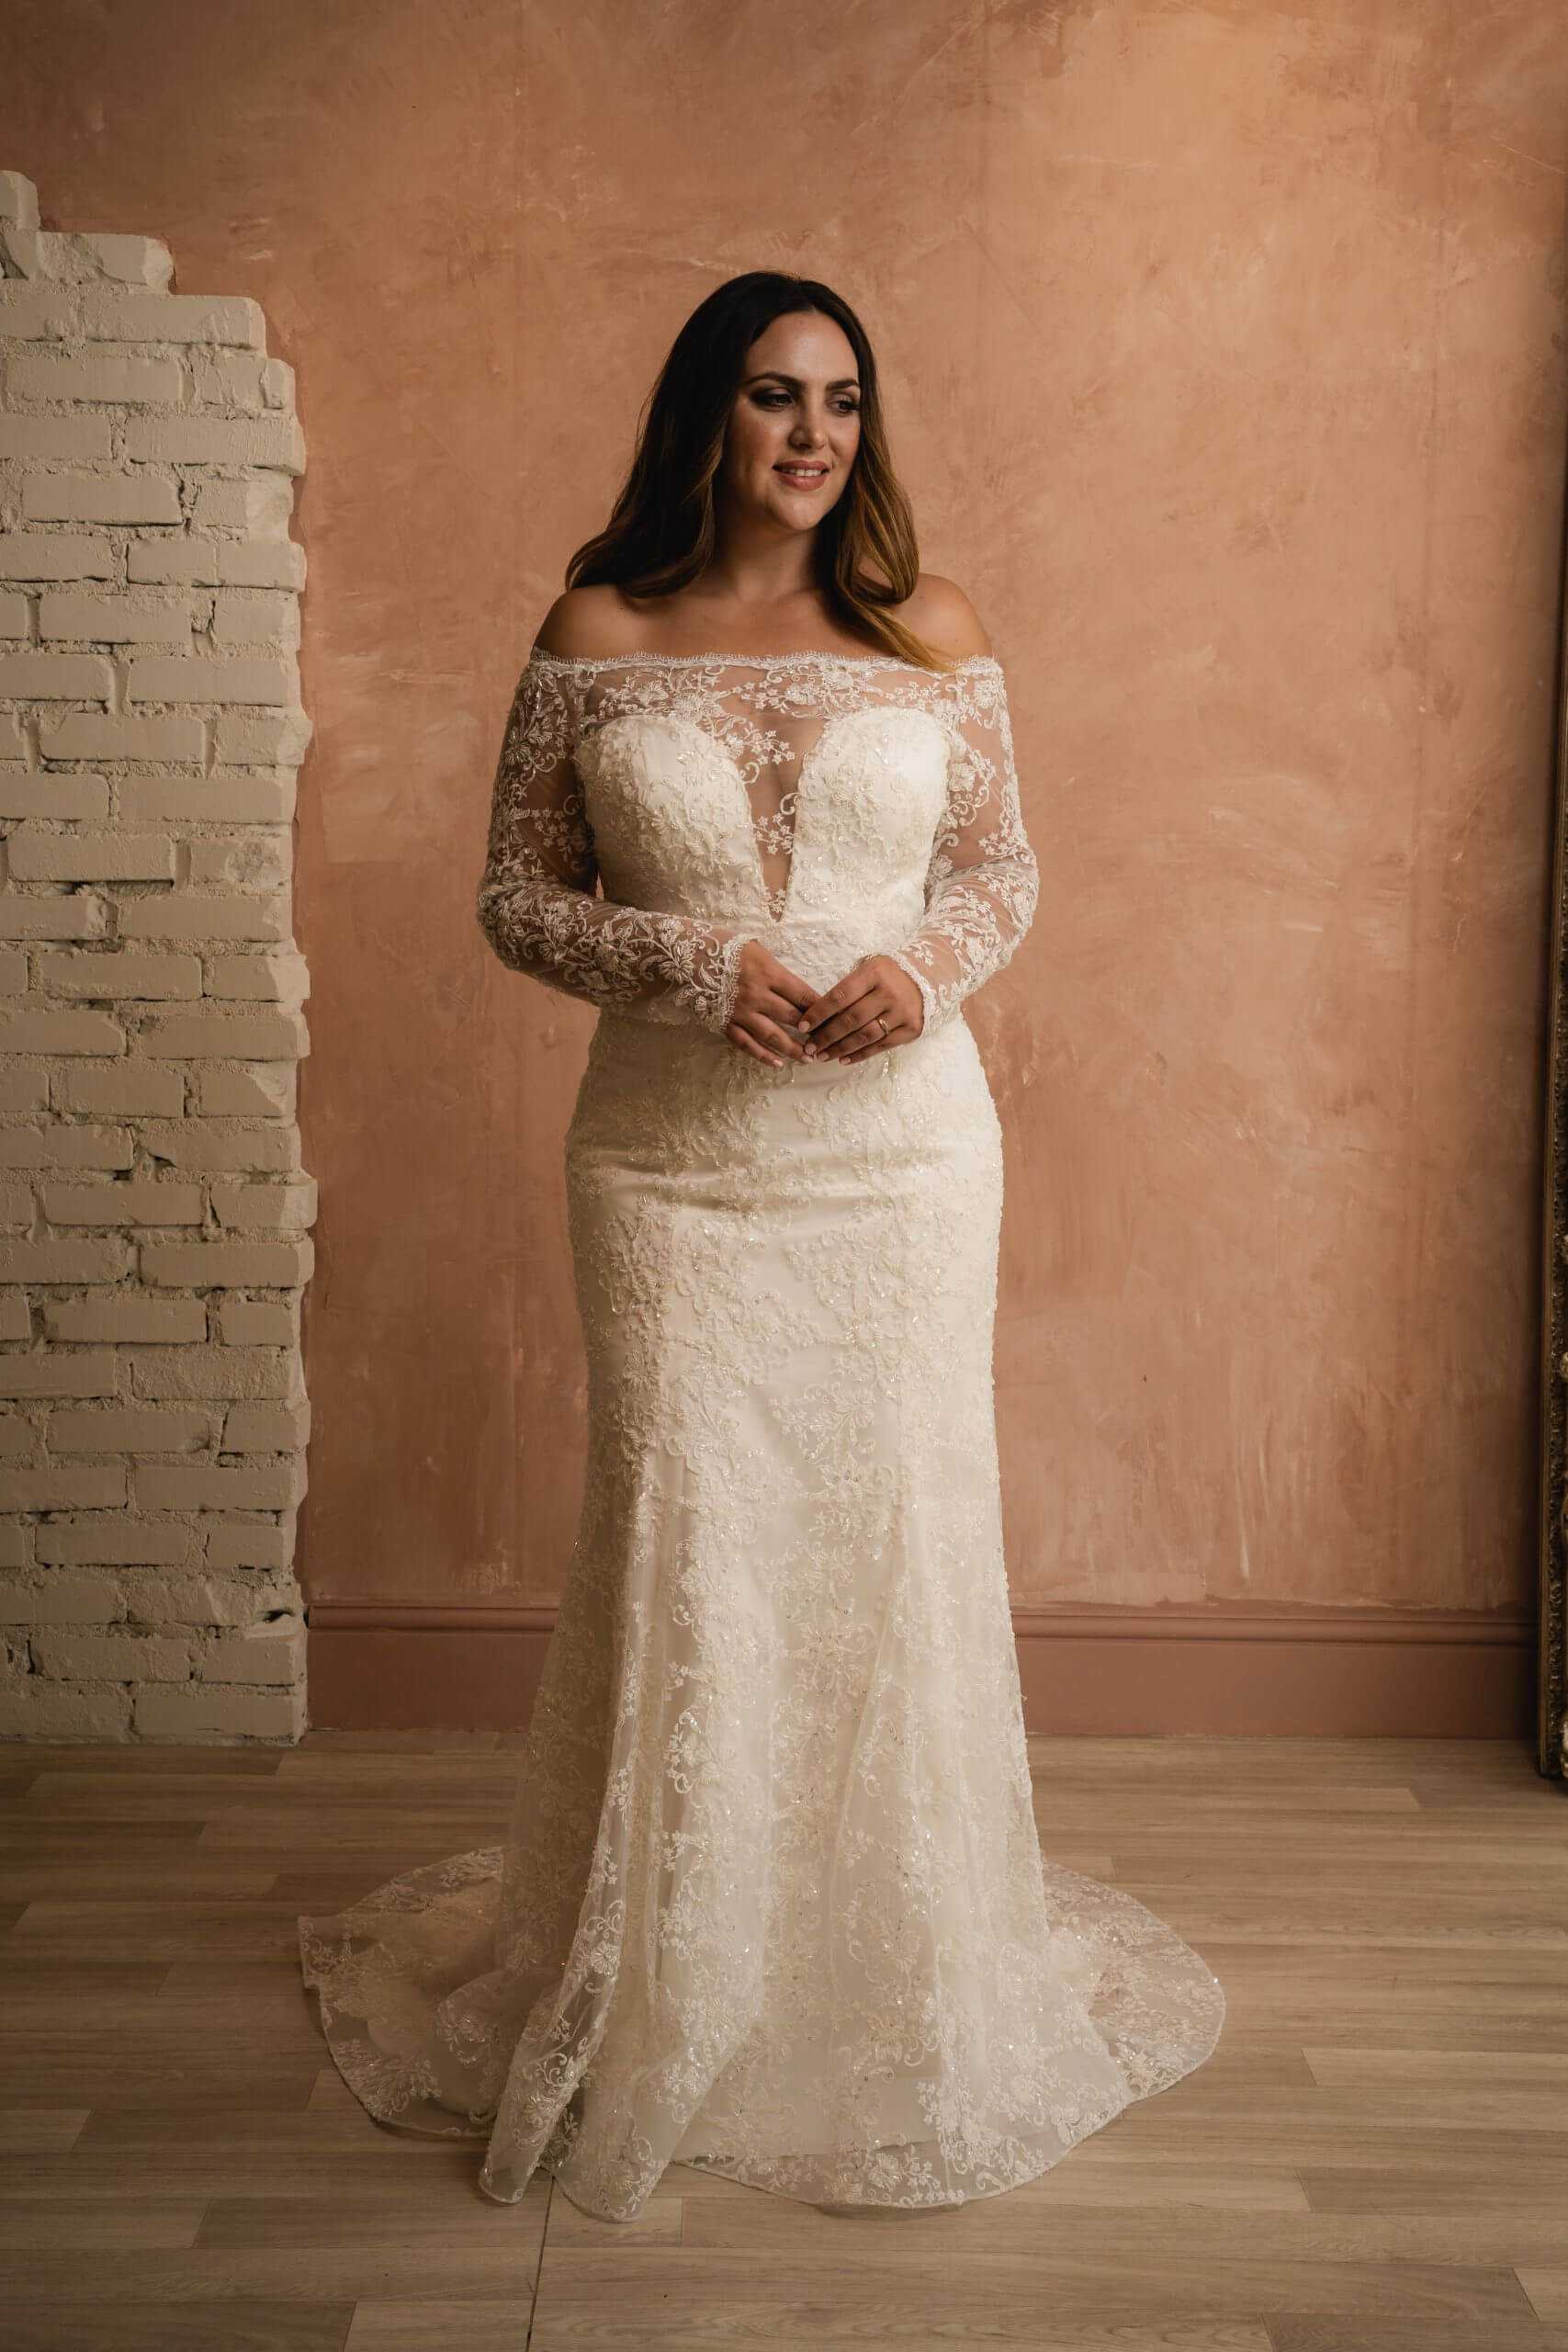 Plus Size Wedding Dresses San Diego - Bridal Gowns Shops In San Diego